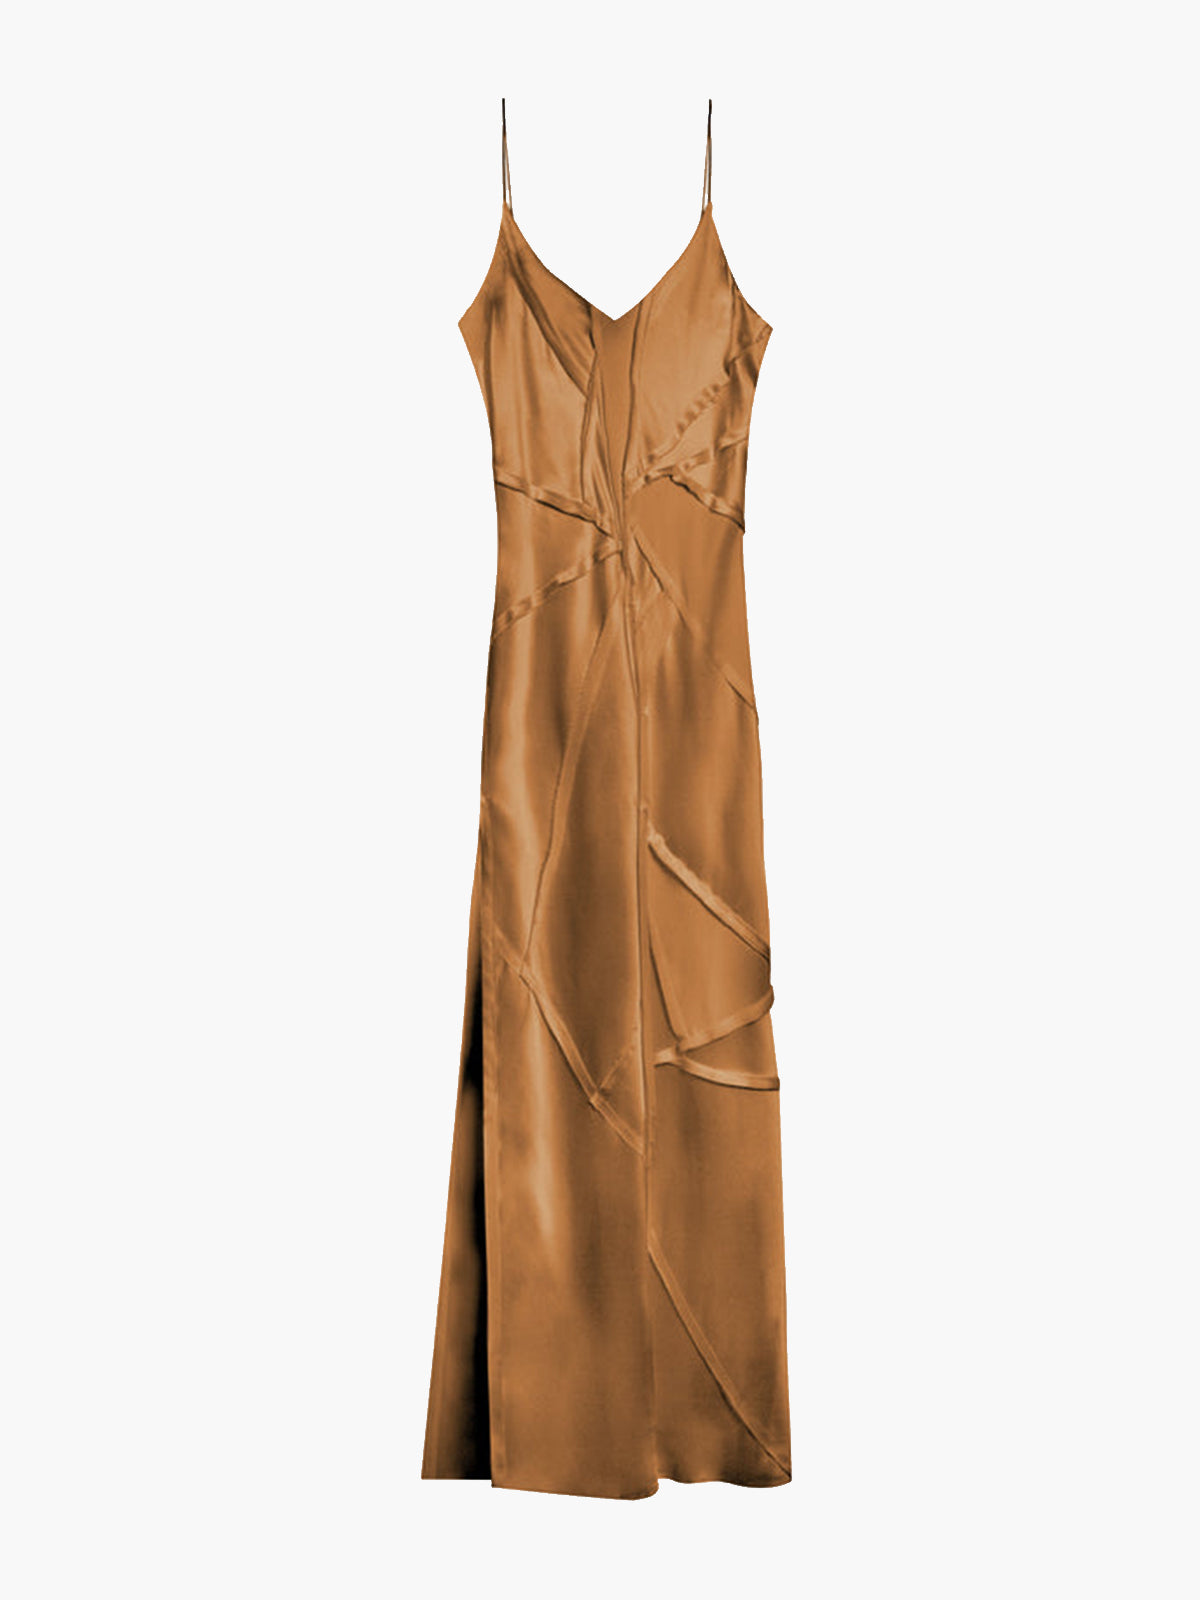 Elongated Recycled Dress with Slit | Walnut